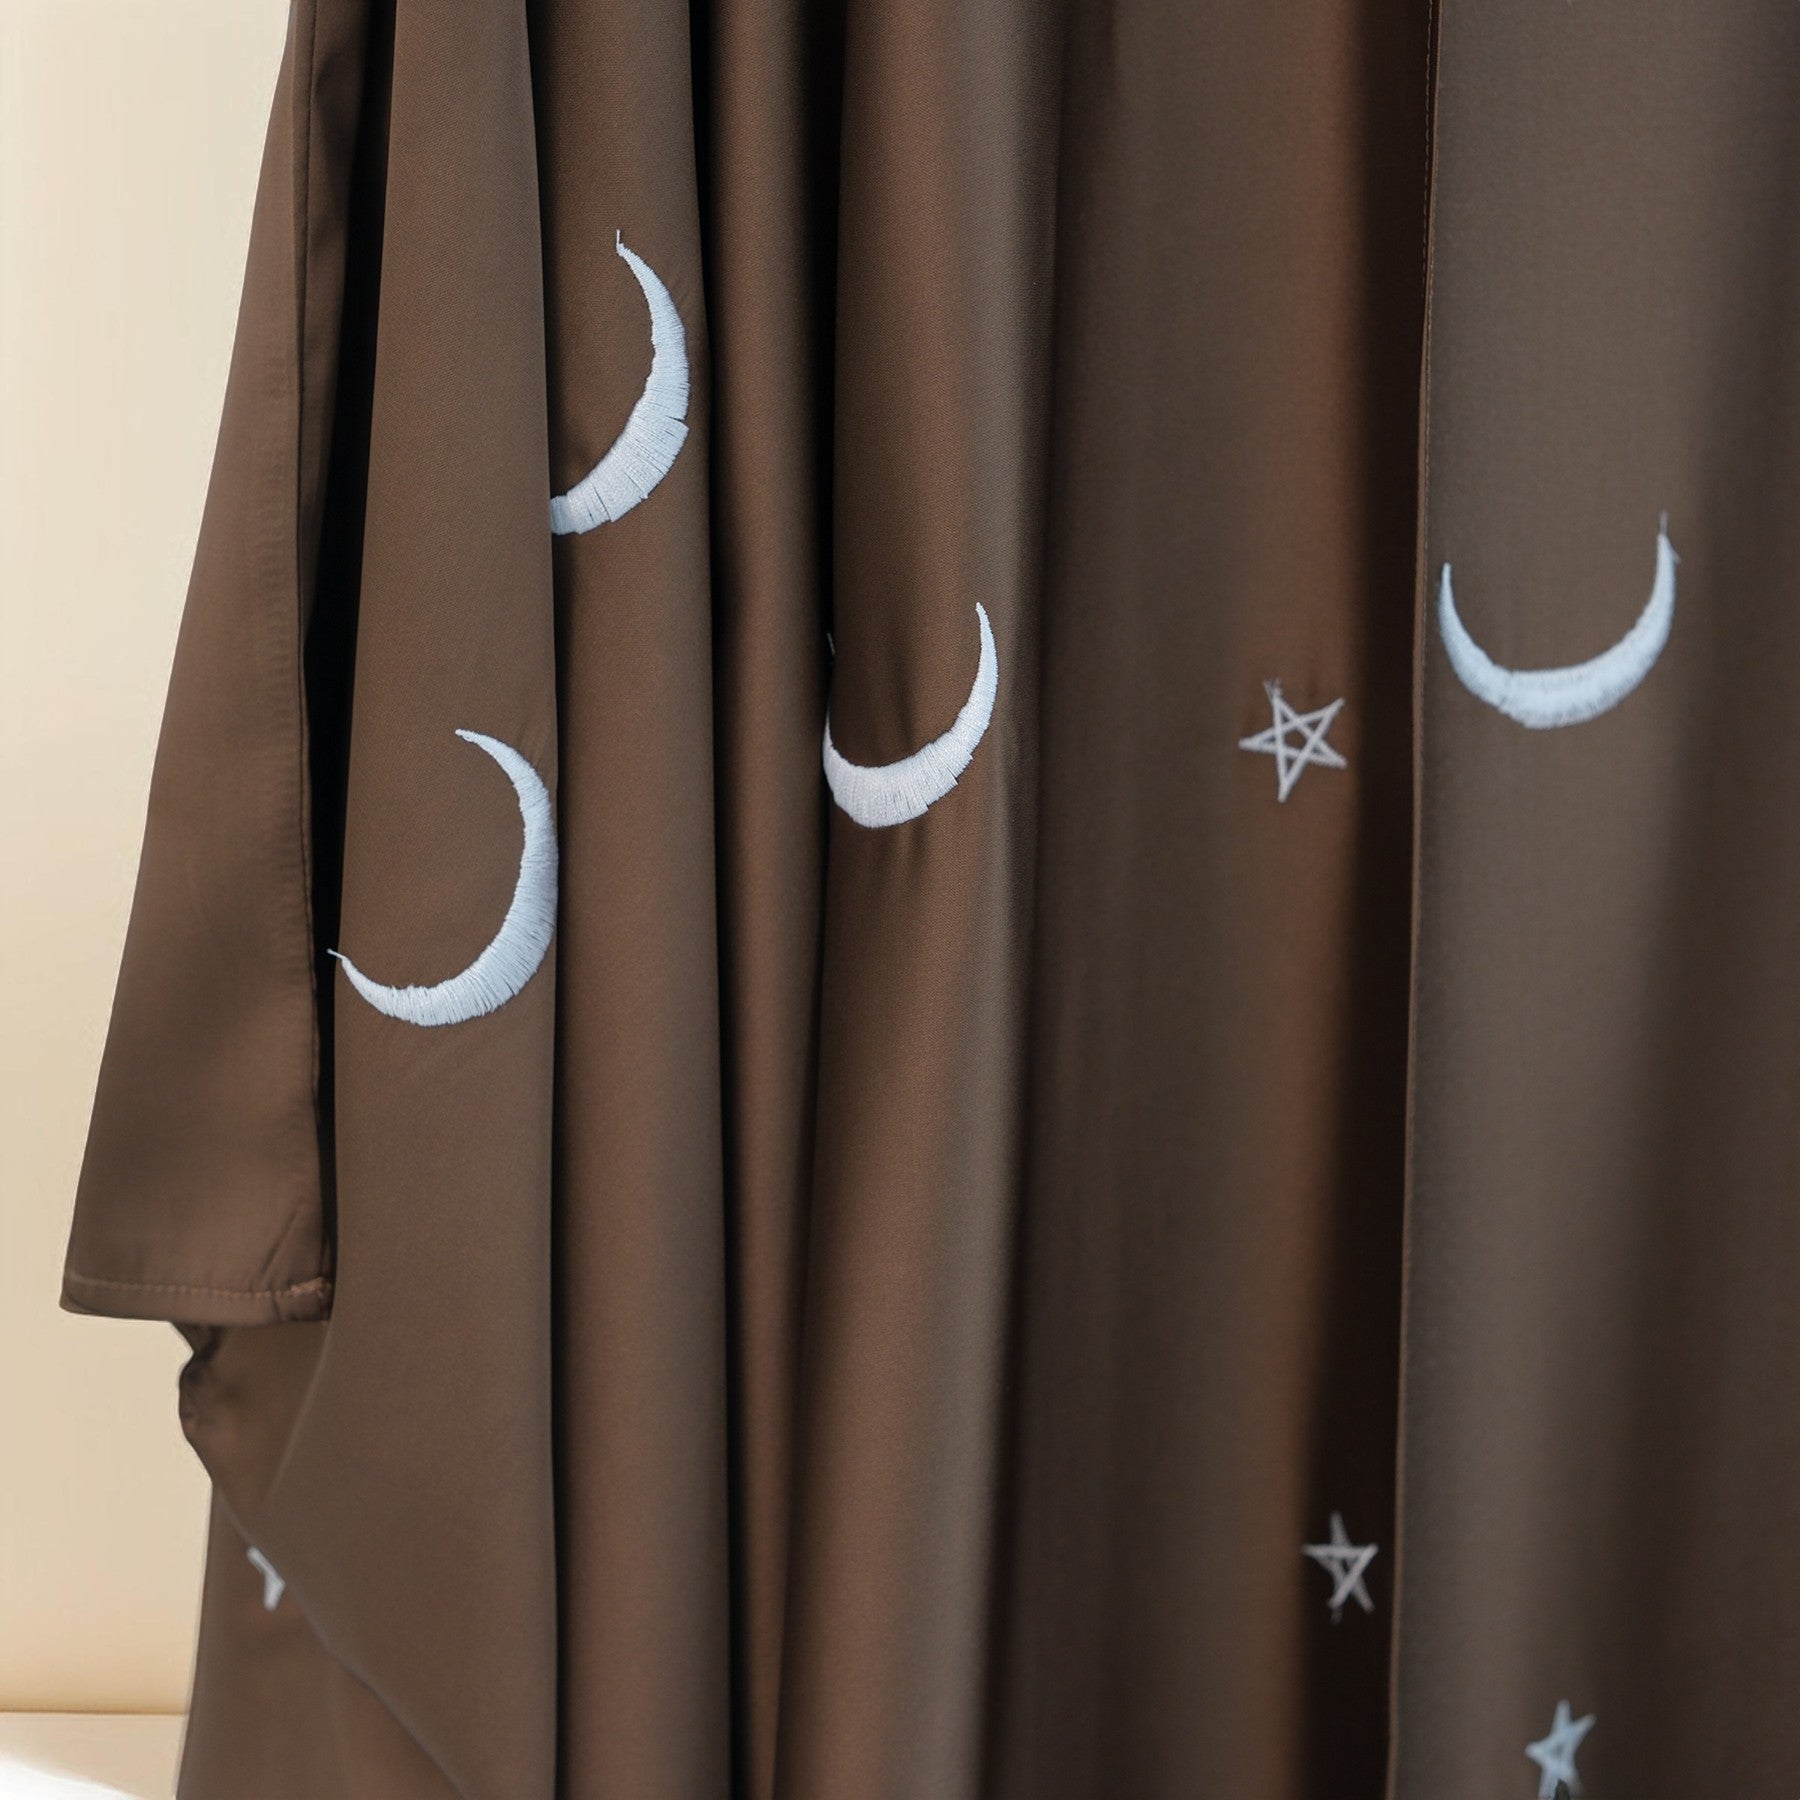 Qamar Ramadan Satin Moonlight Abaya - Try Modest Limited 